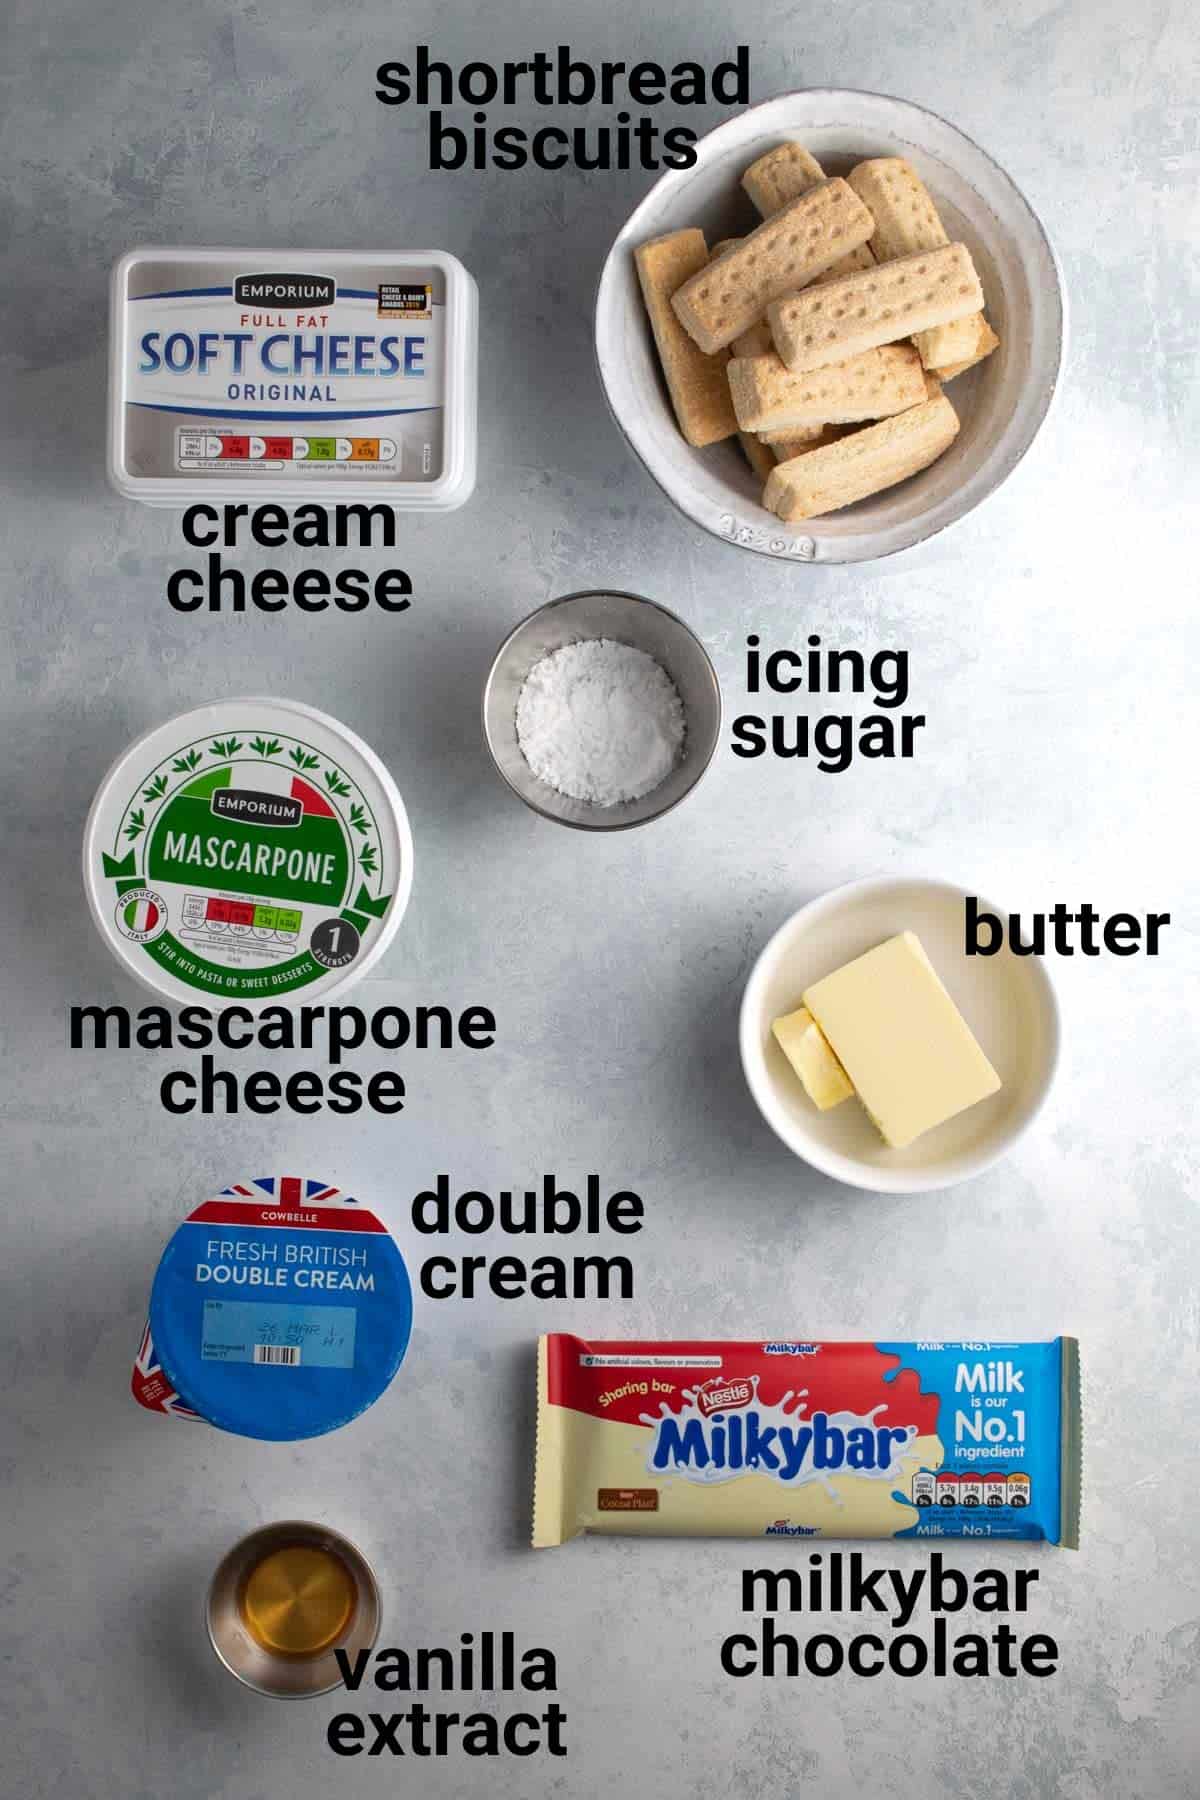 Milkybar cheesecake ingredients.